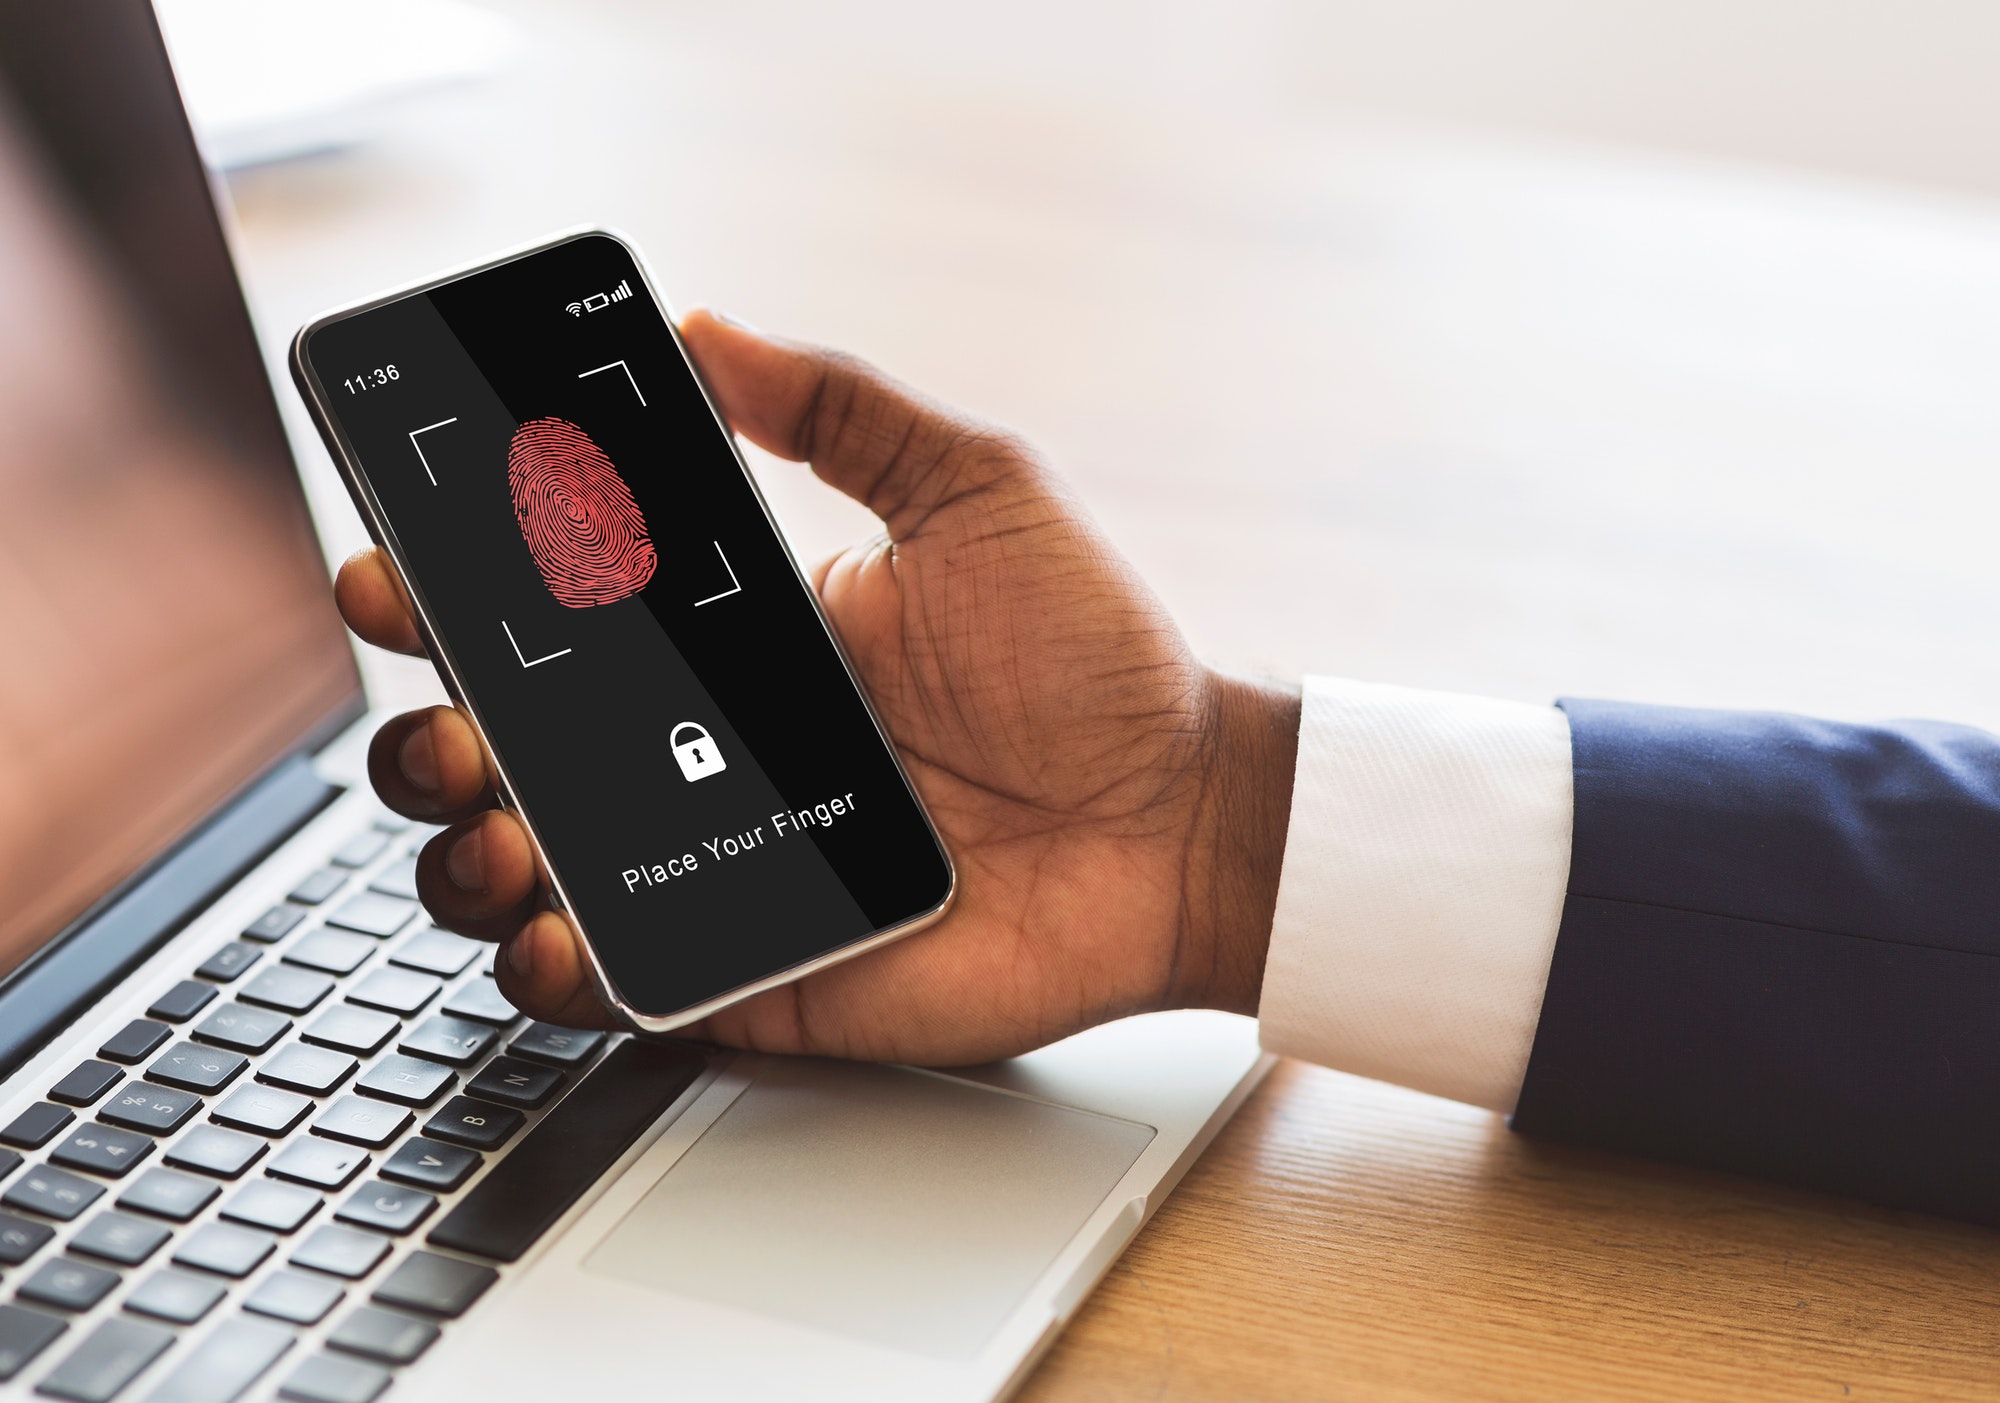 Man holding phone with fingerprint scanning smartphone app